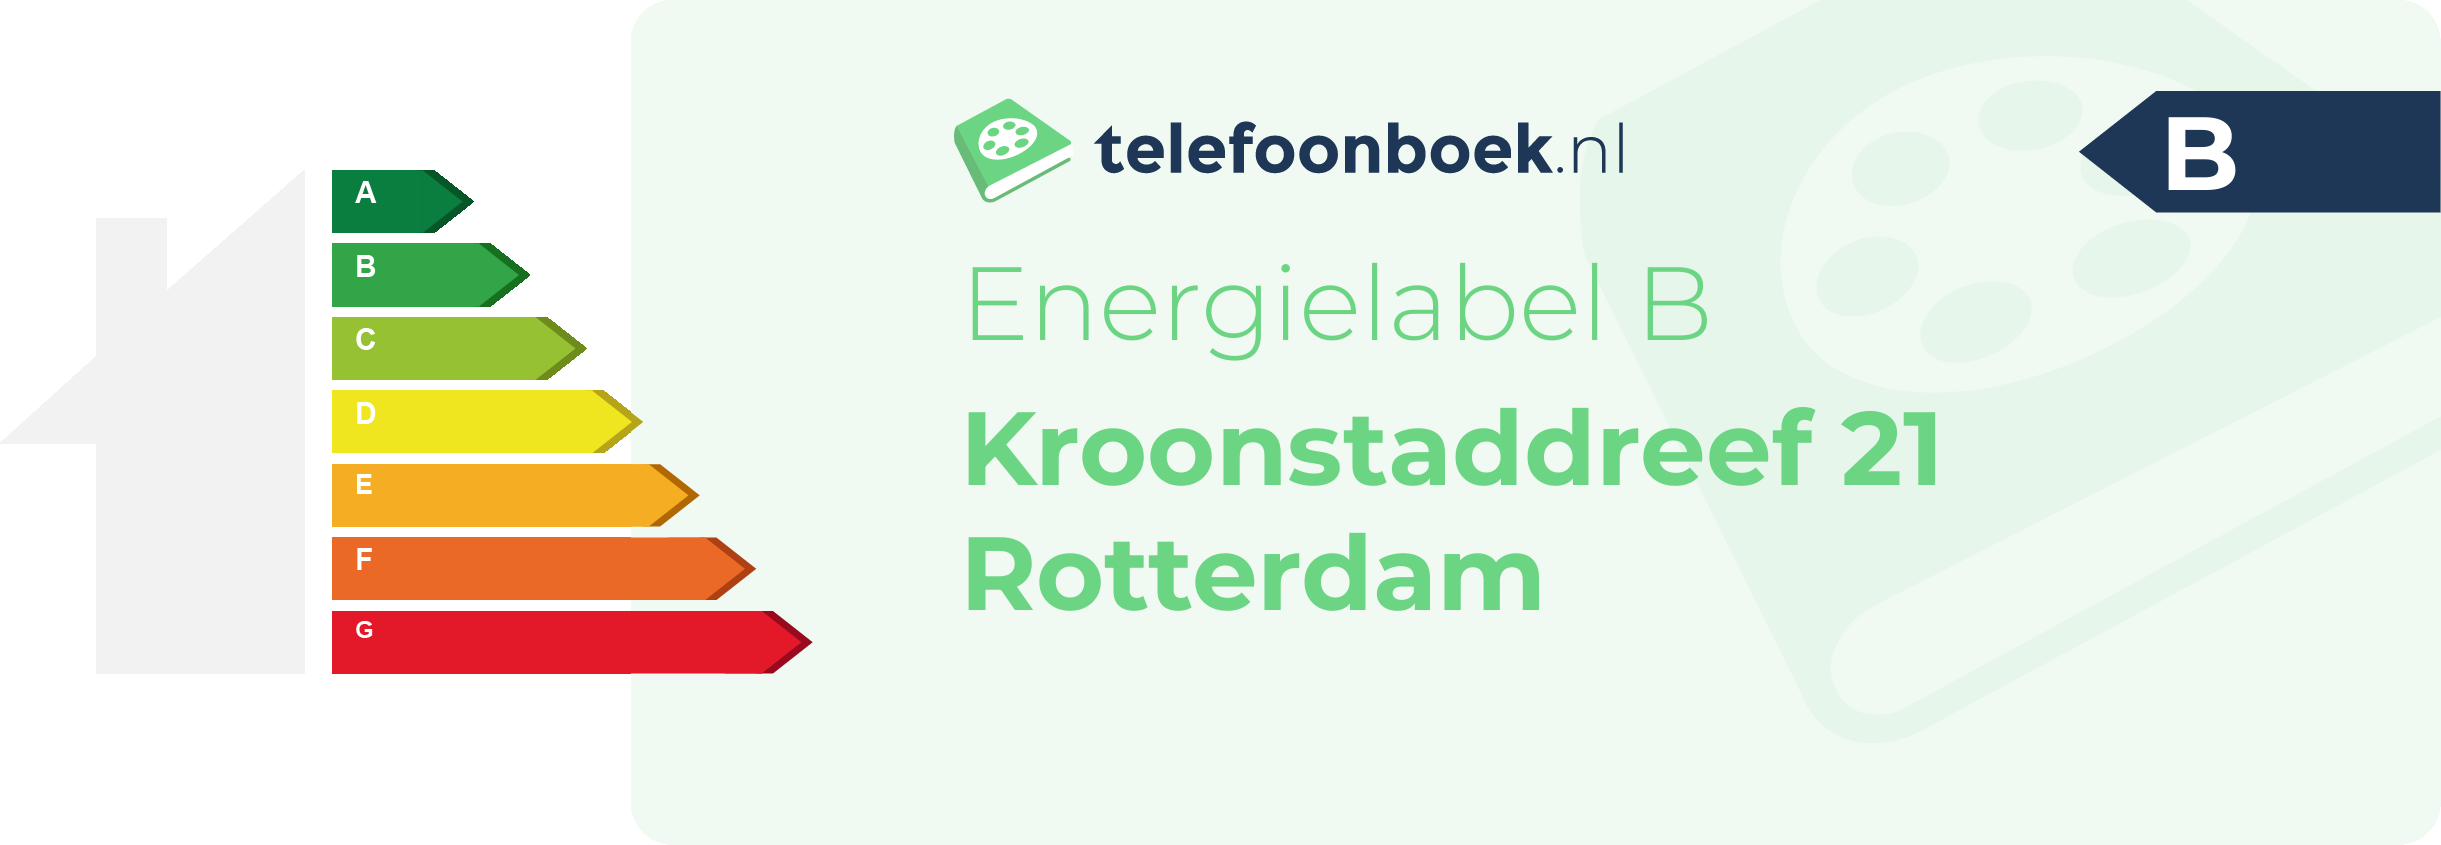 Energielabel Kroonstaddreef 21 Rotterdam